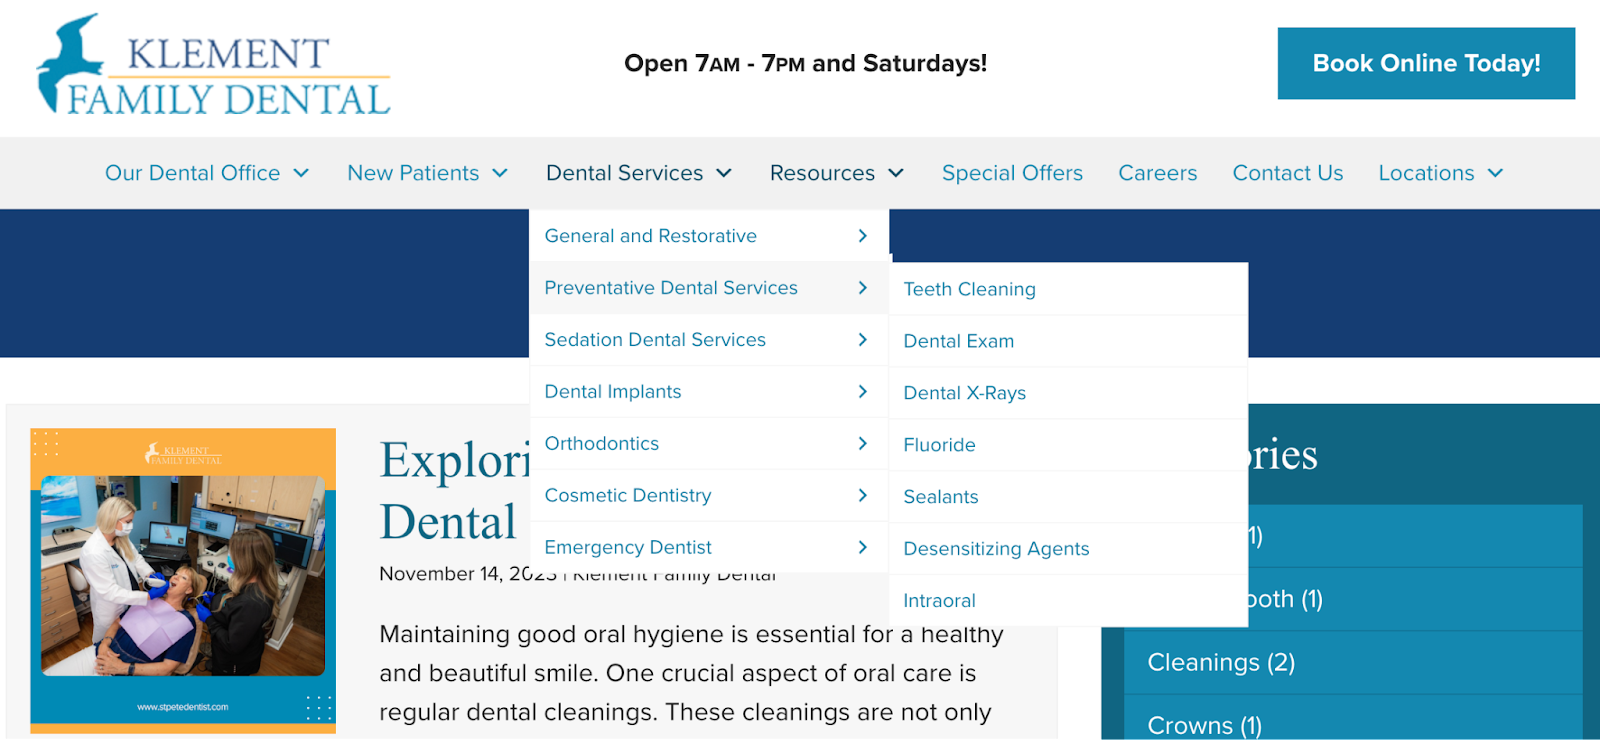 Klement Family Dental webbplatsarkitektur